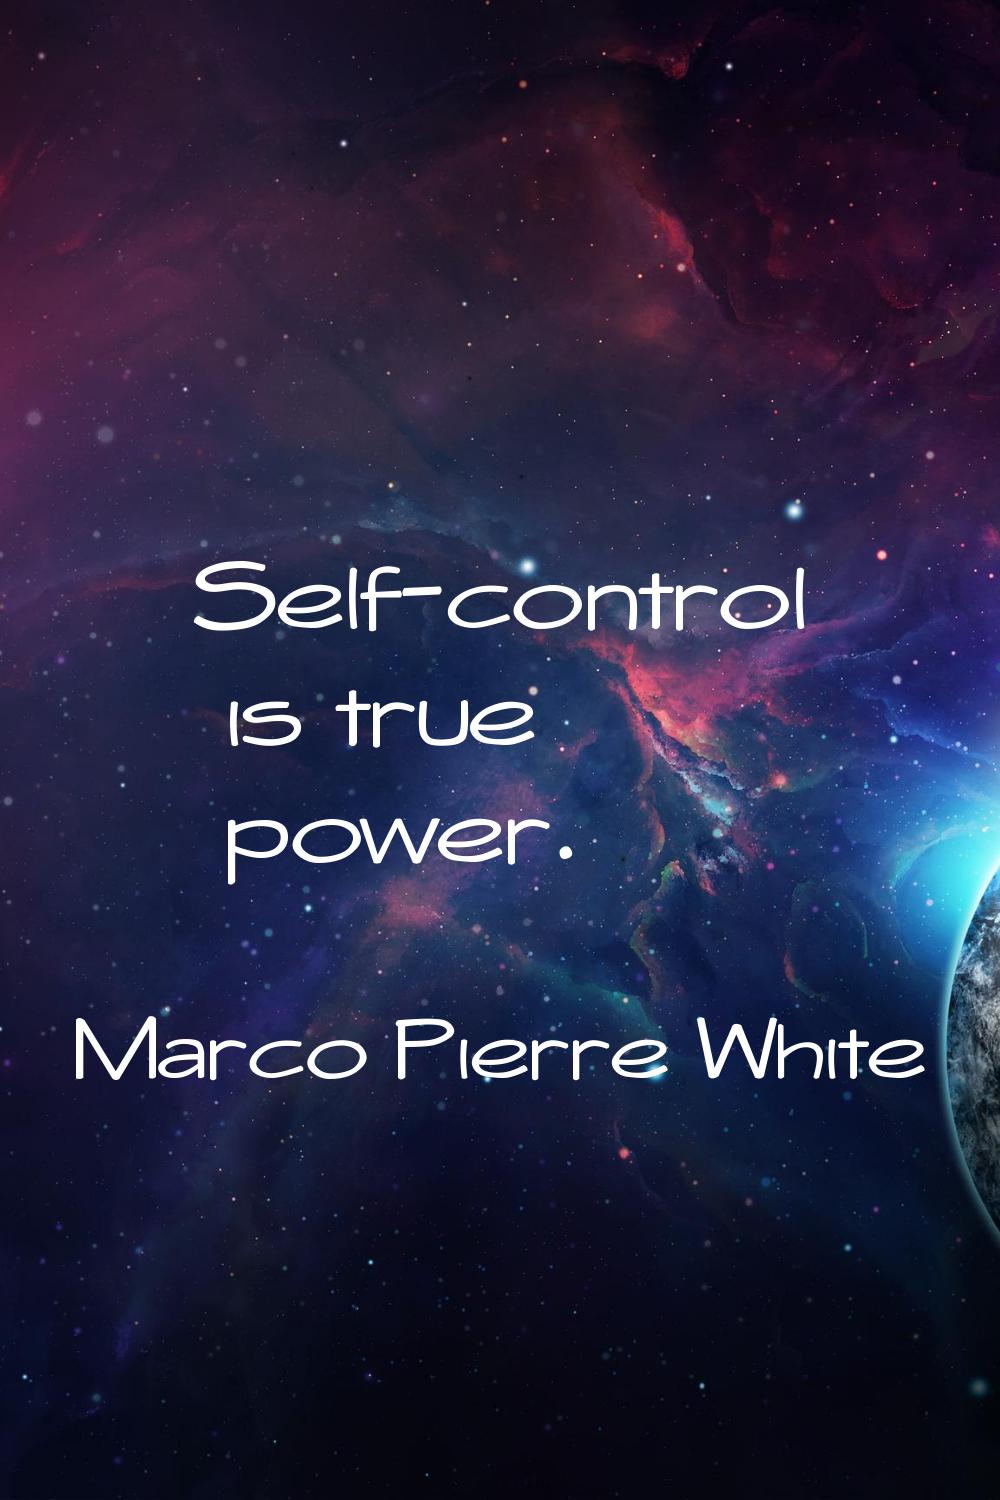 Self-control is true power.